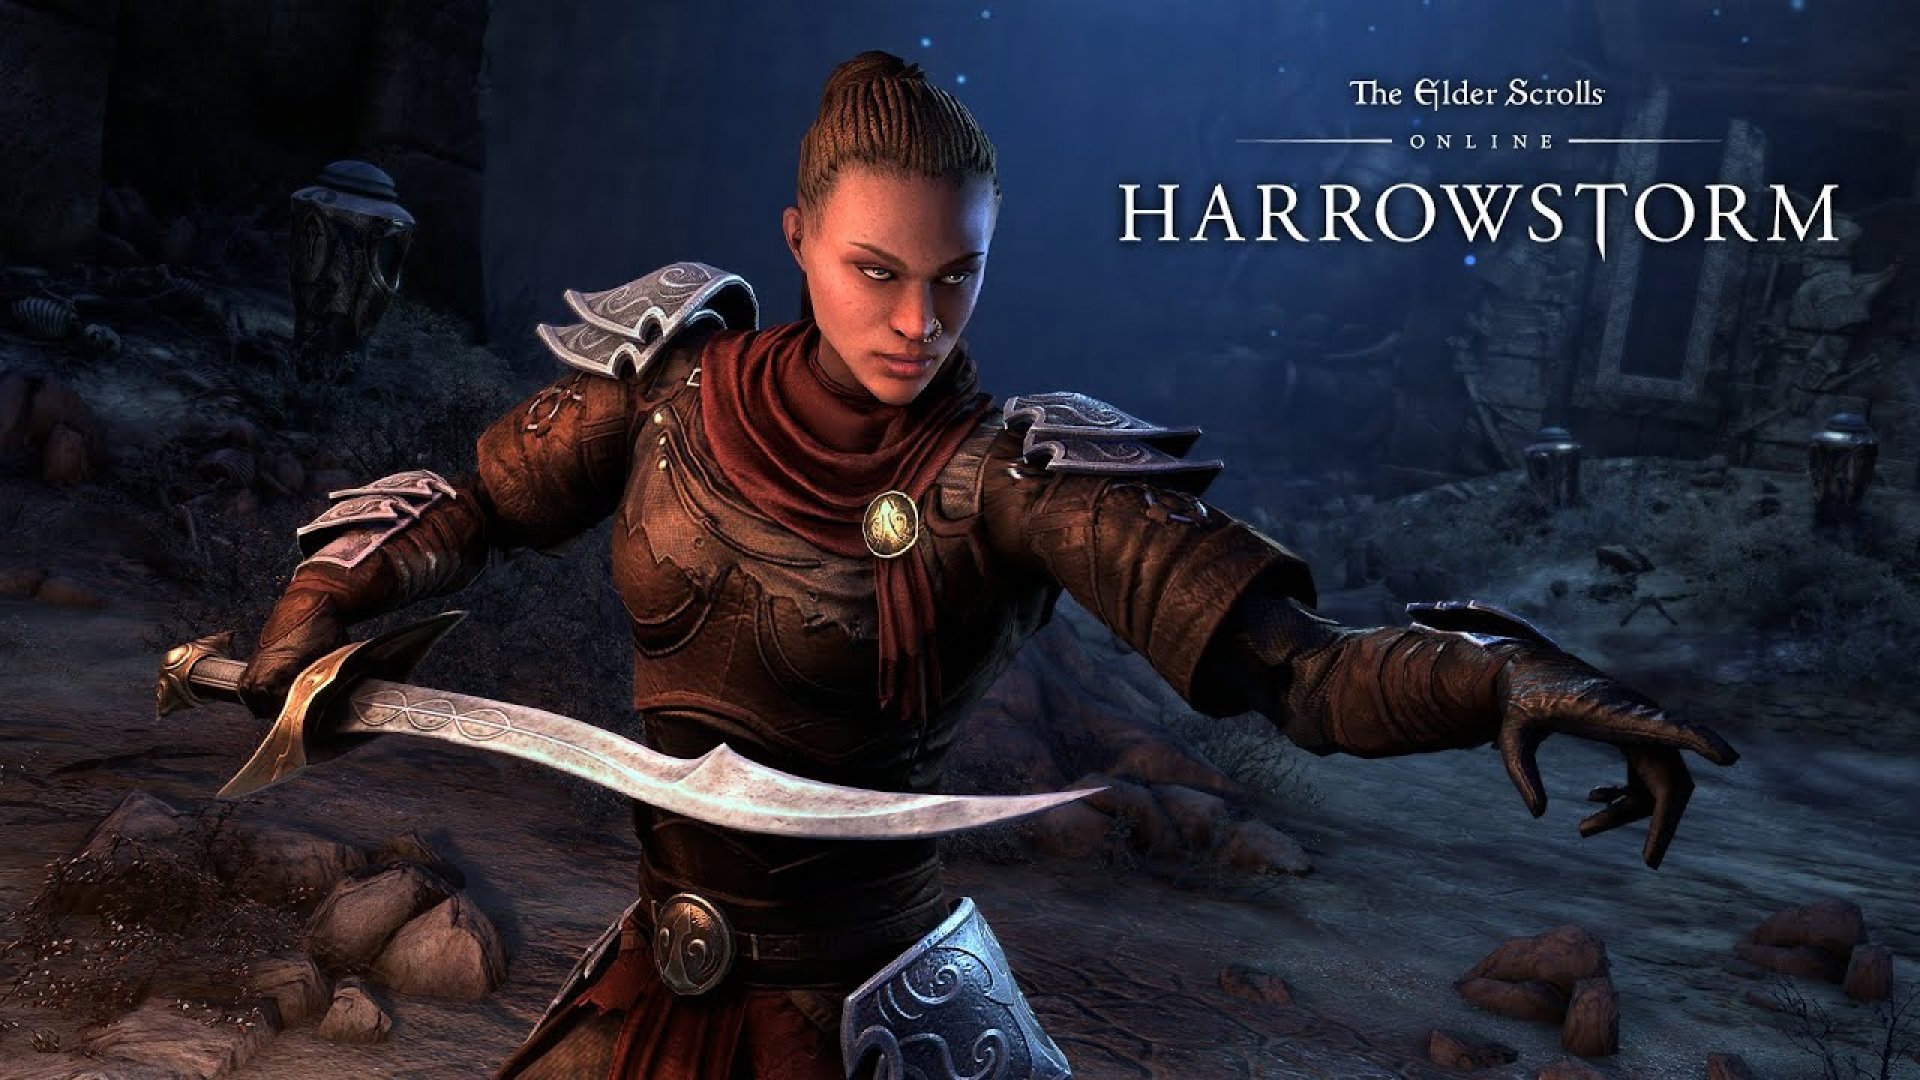 игра The Elder Scrolls Online 2020: Harrowstorm